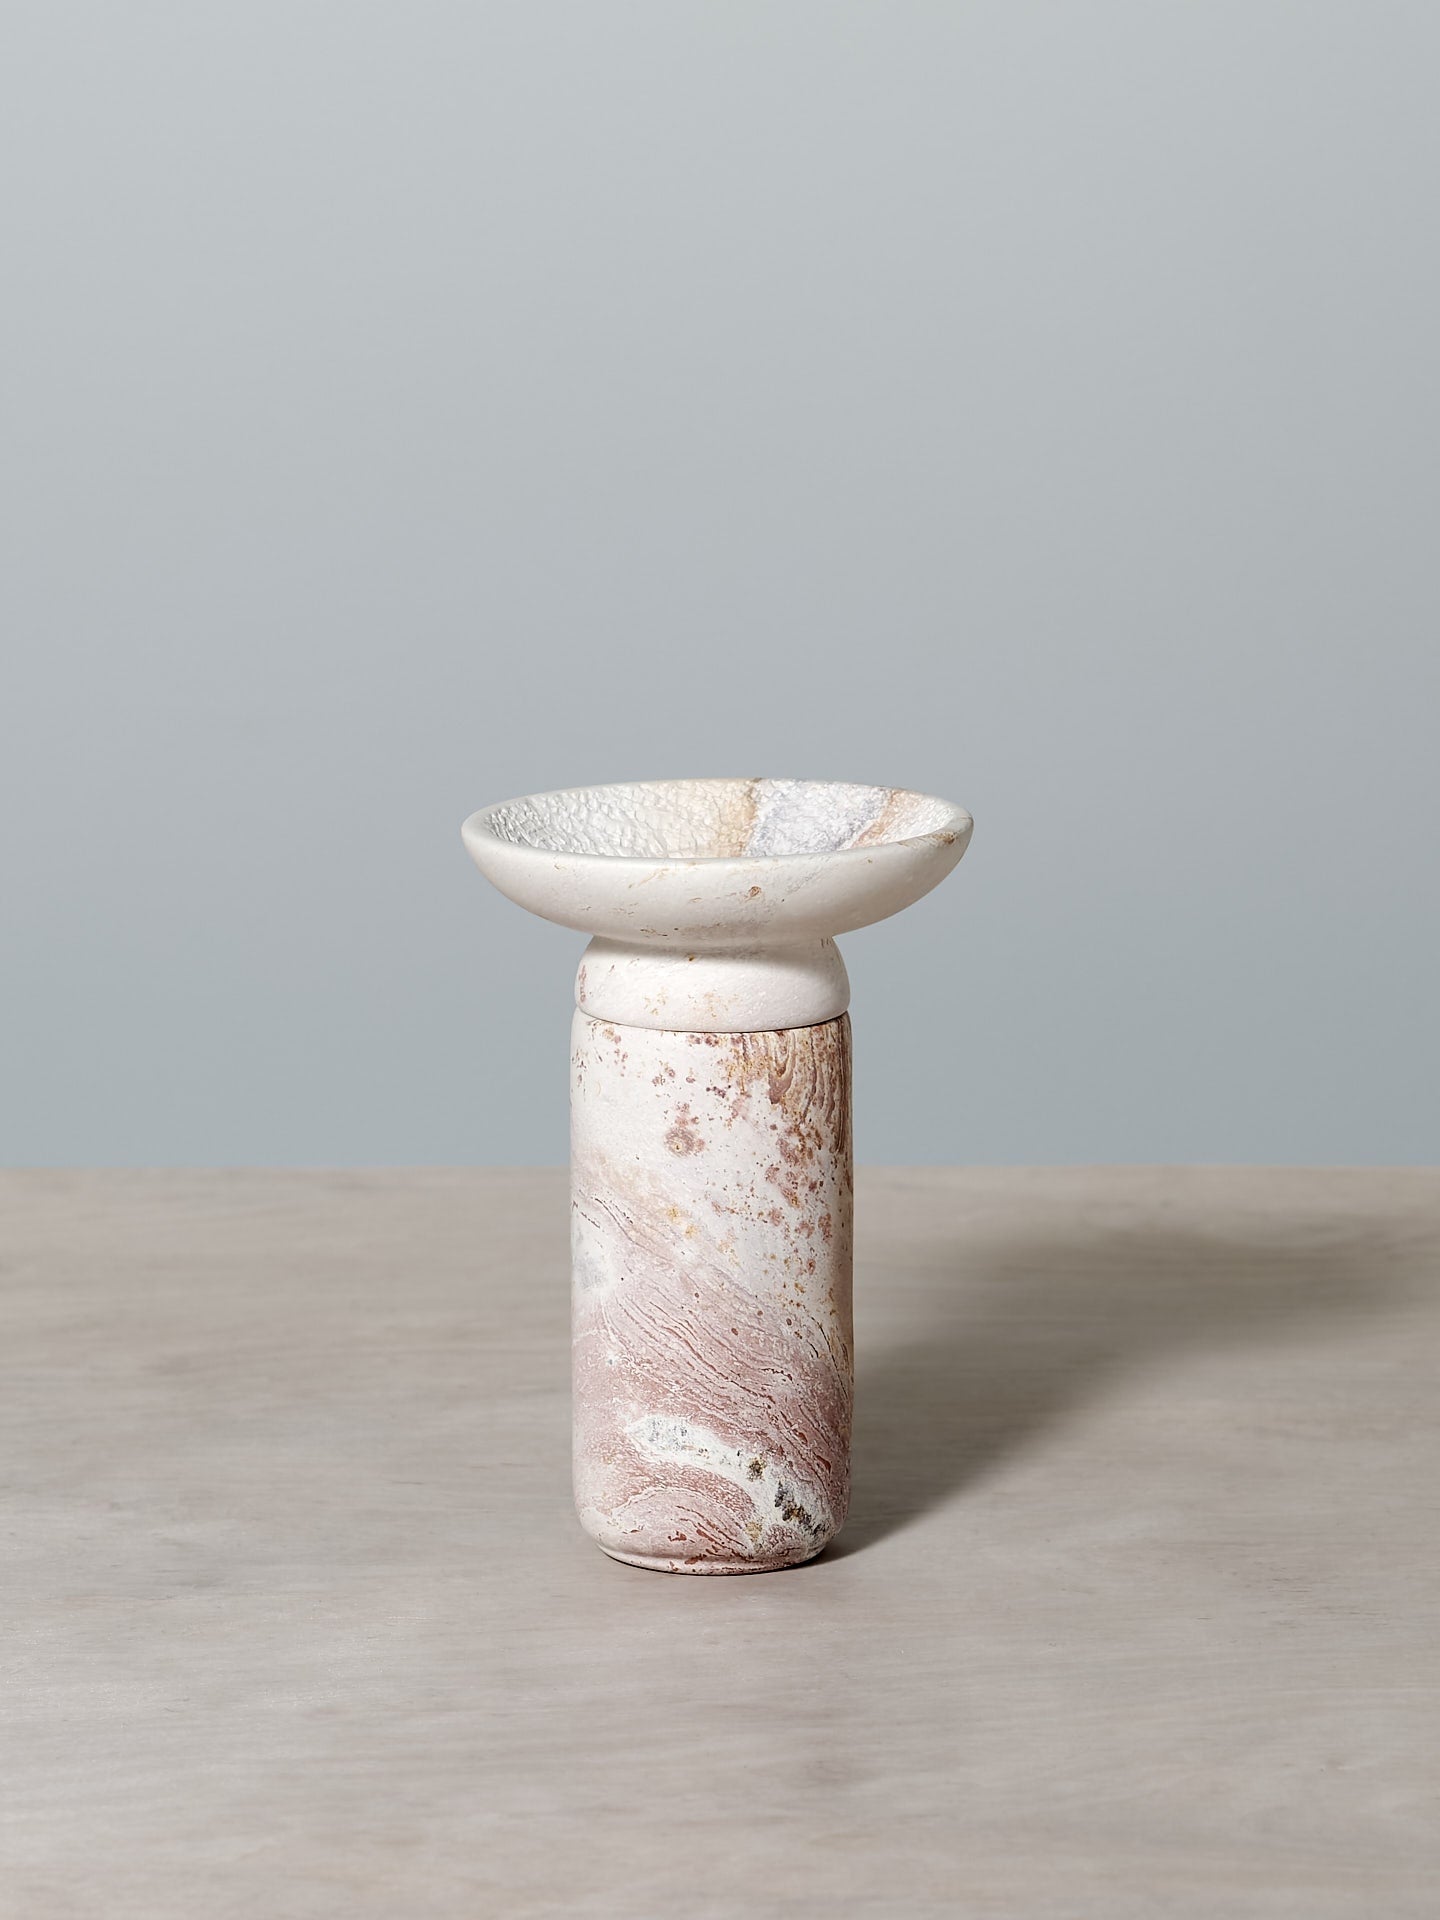 An Asili Amina Bowl Set Small – Pink sitting on a table.